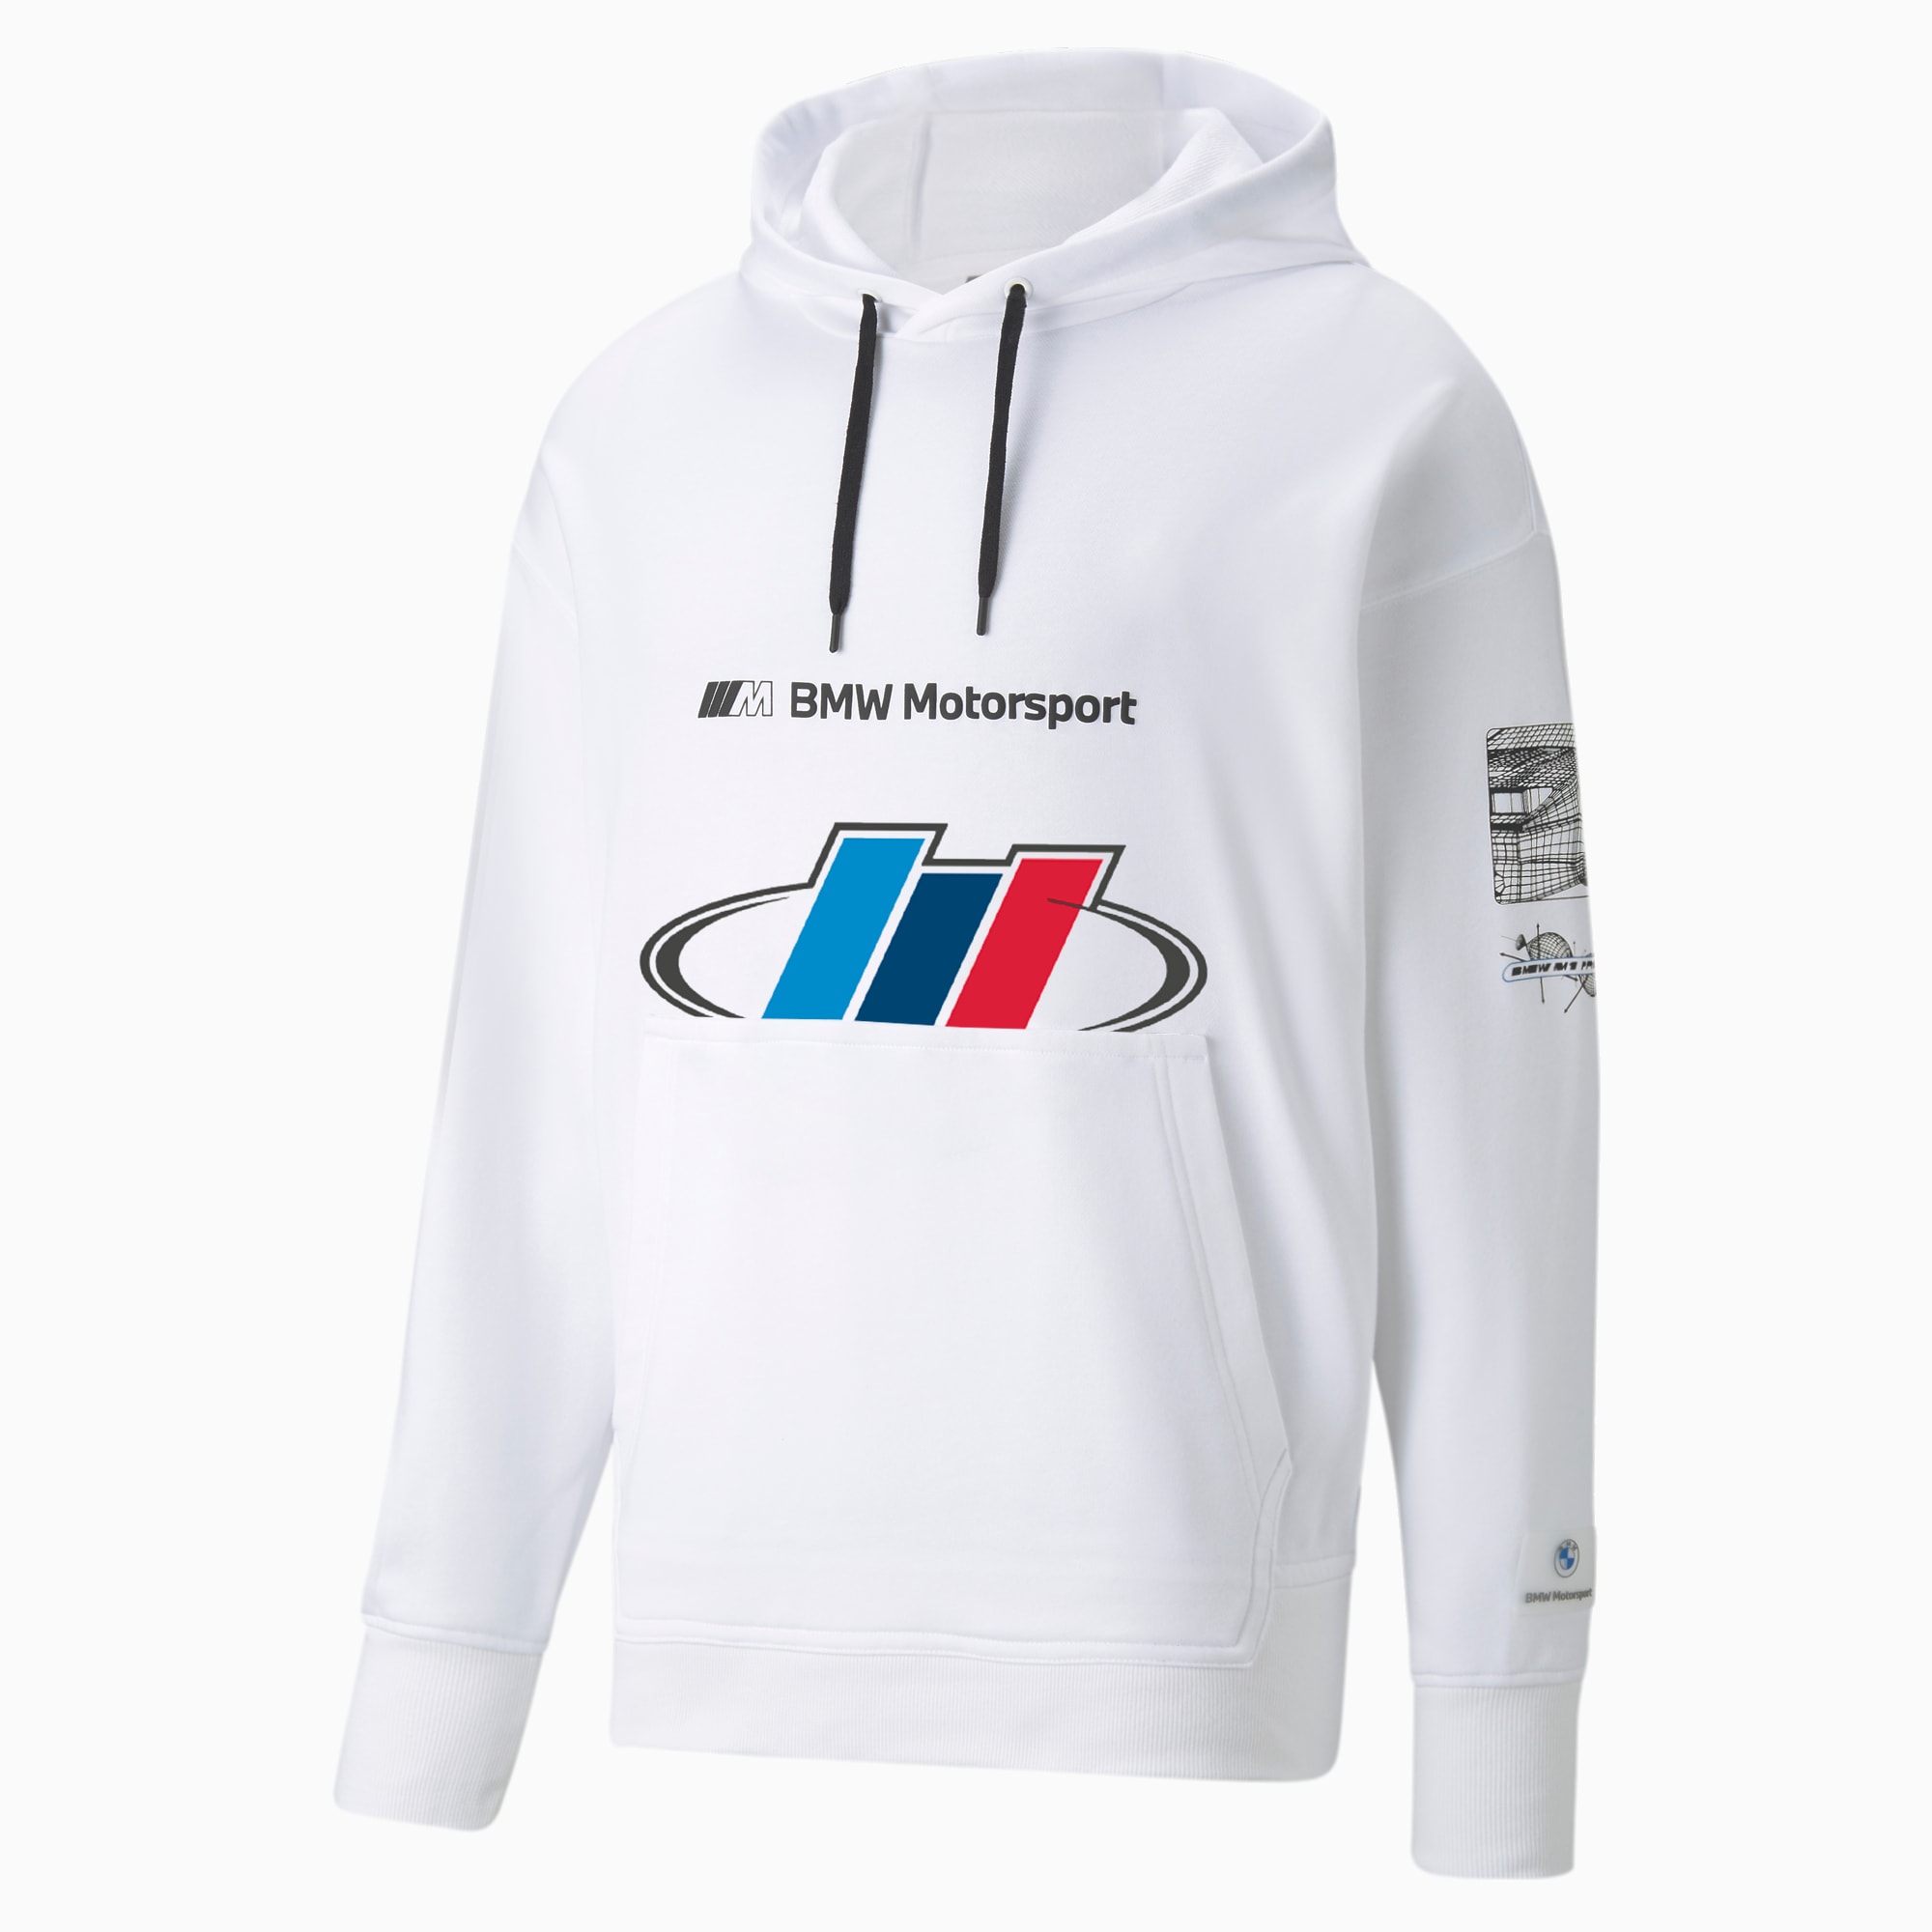 Sweatshirt Puma BMW Motorsport SDS - Sweats - Lifestyle Homme - Lifestyle